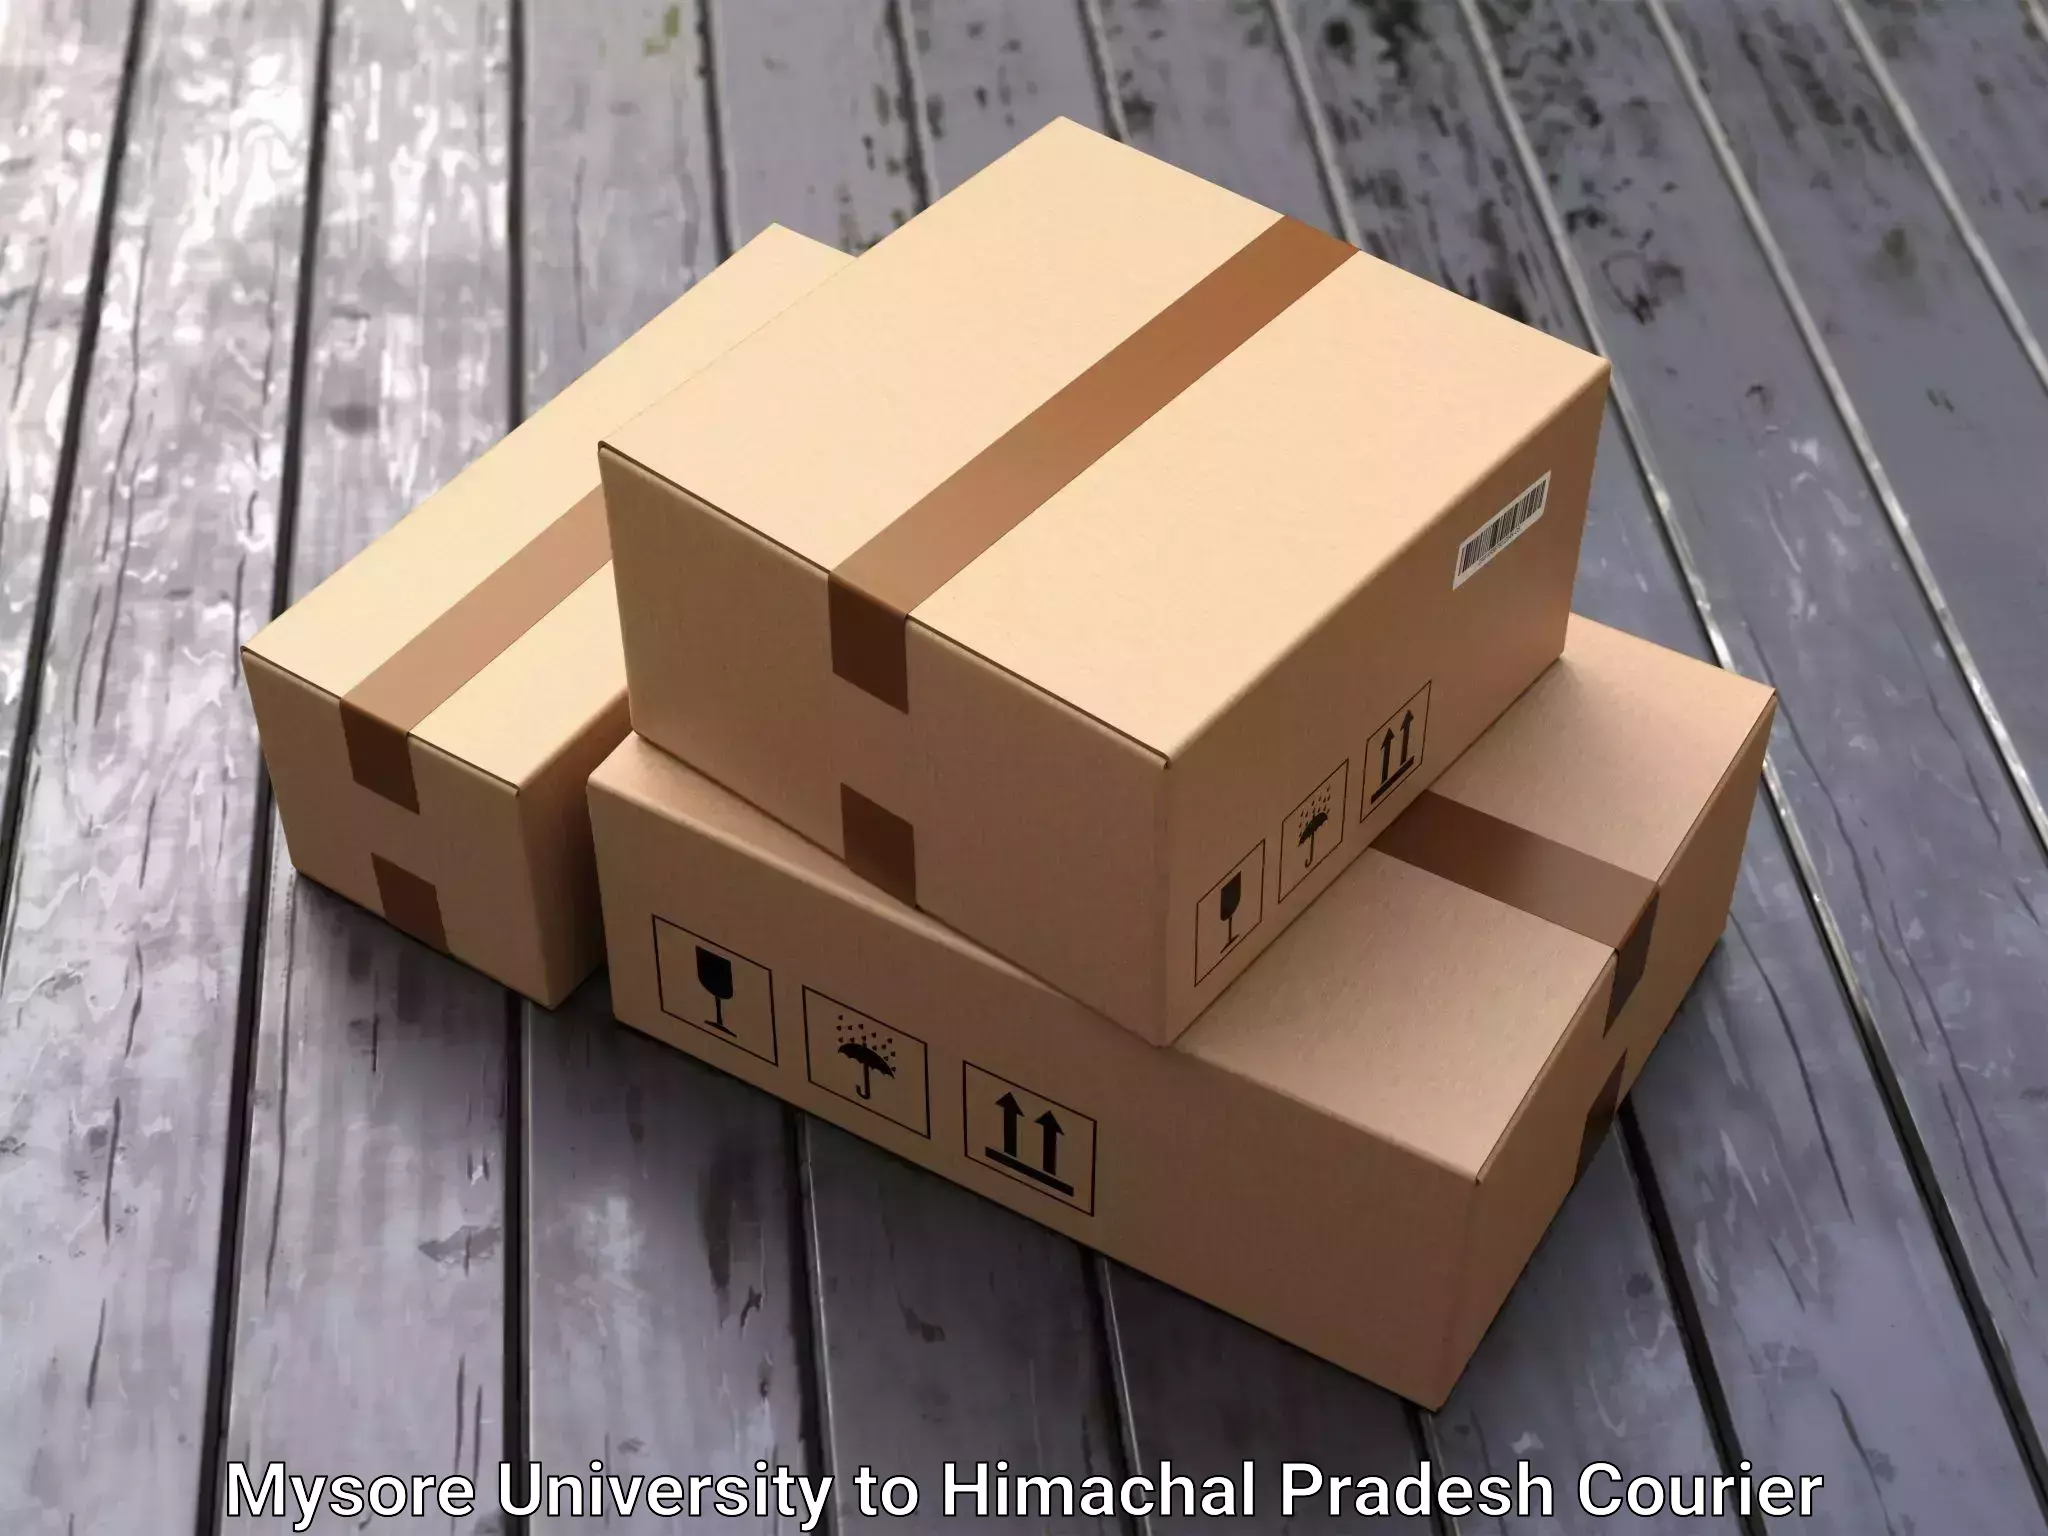 Efficient moving company Mysore University to Himachal Pradesh